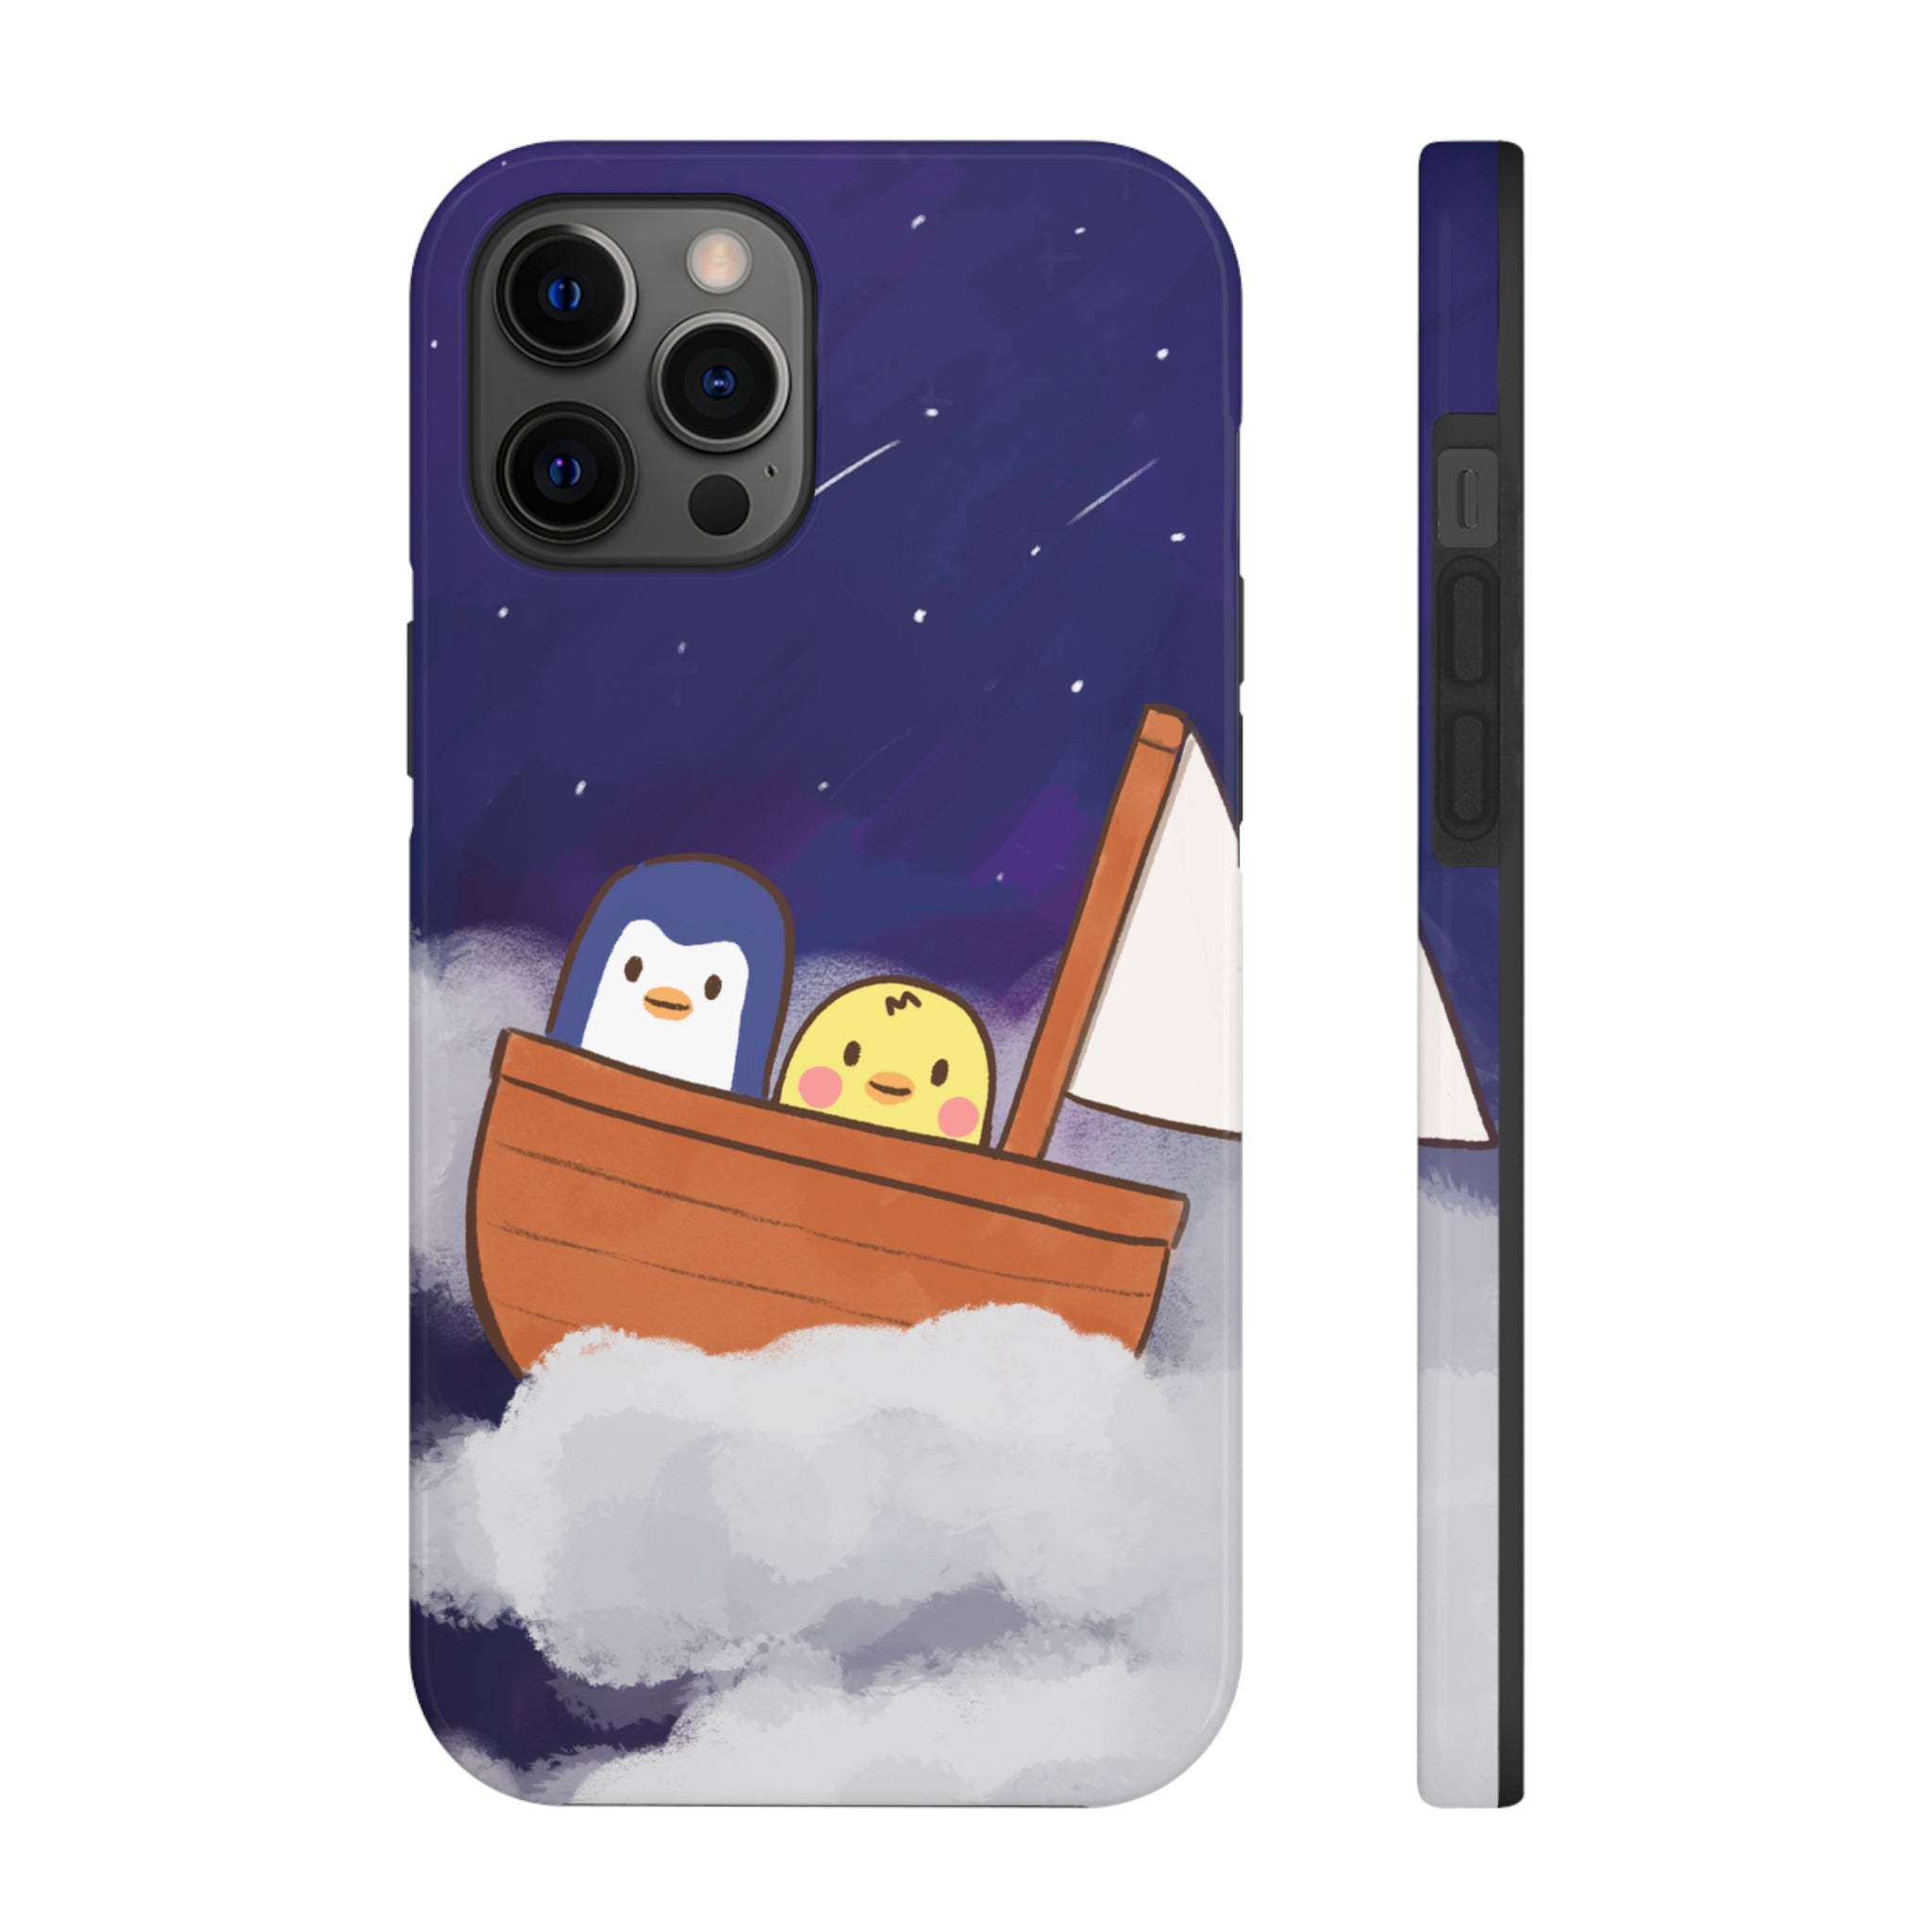 Night Sky Sailing iPhone Case